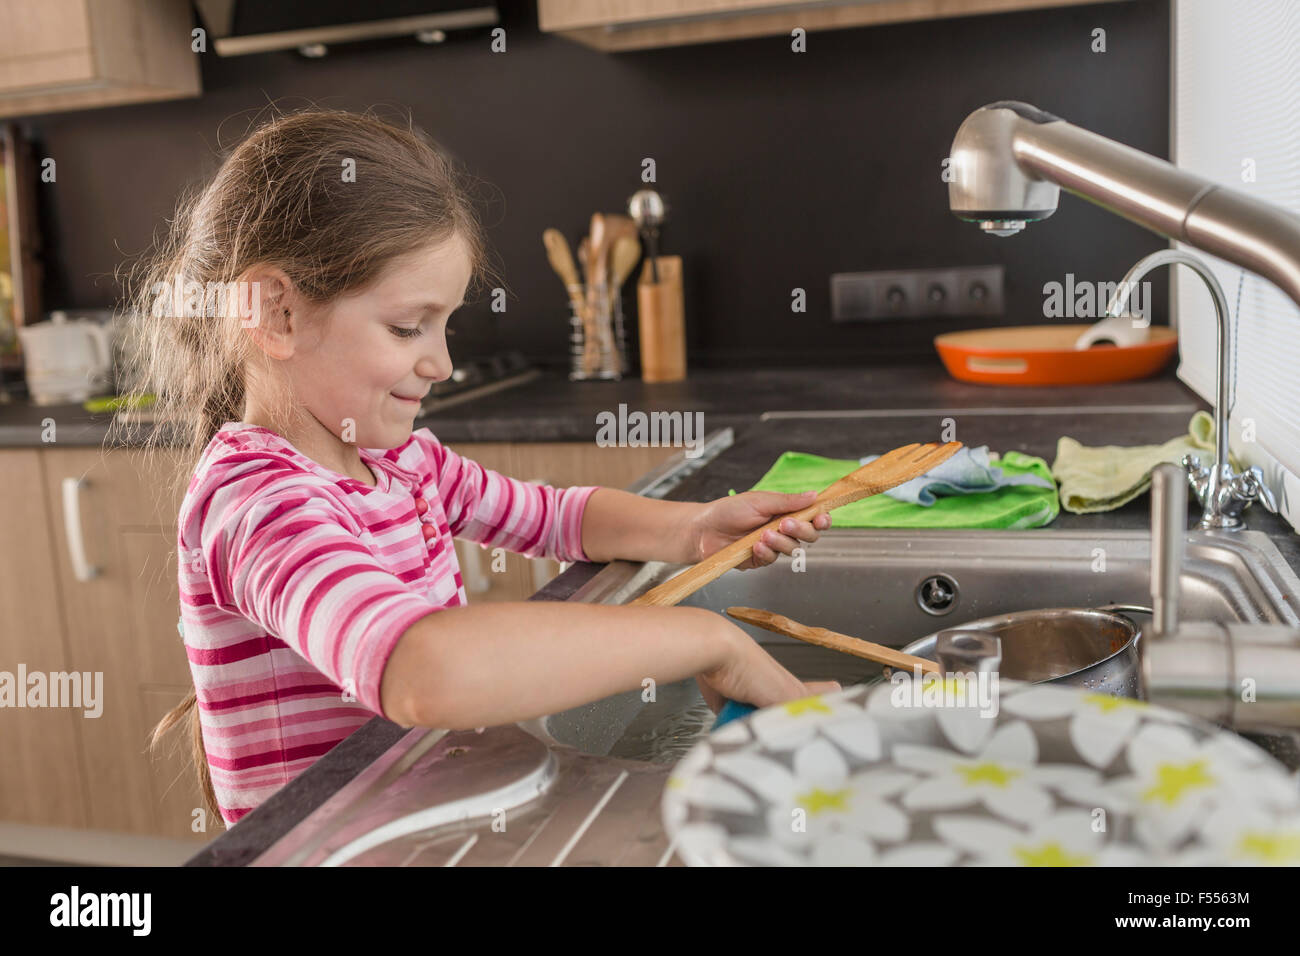 Smiling girl washing utensils in kitchen at home Stock Photo